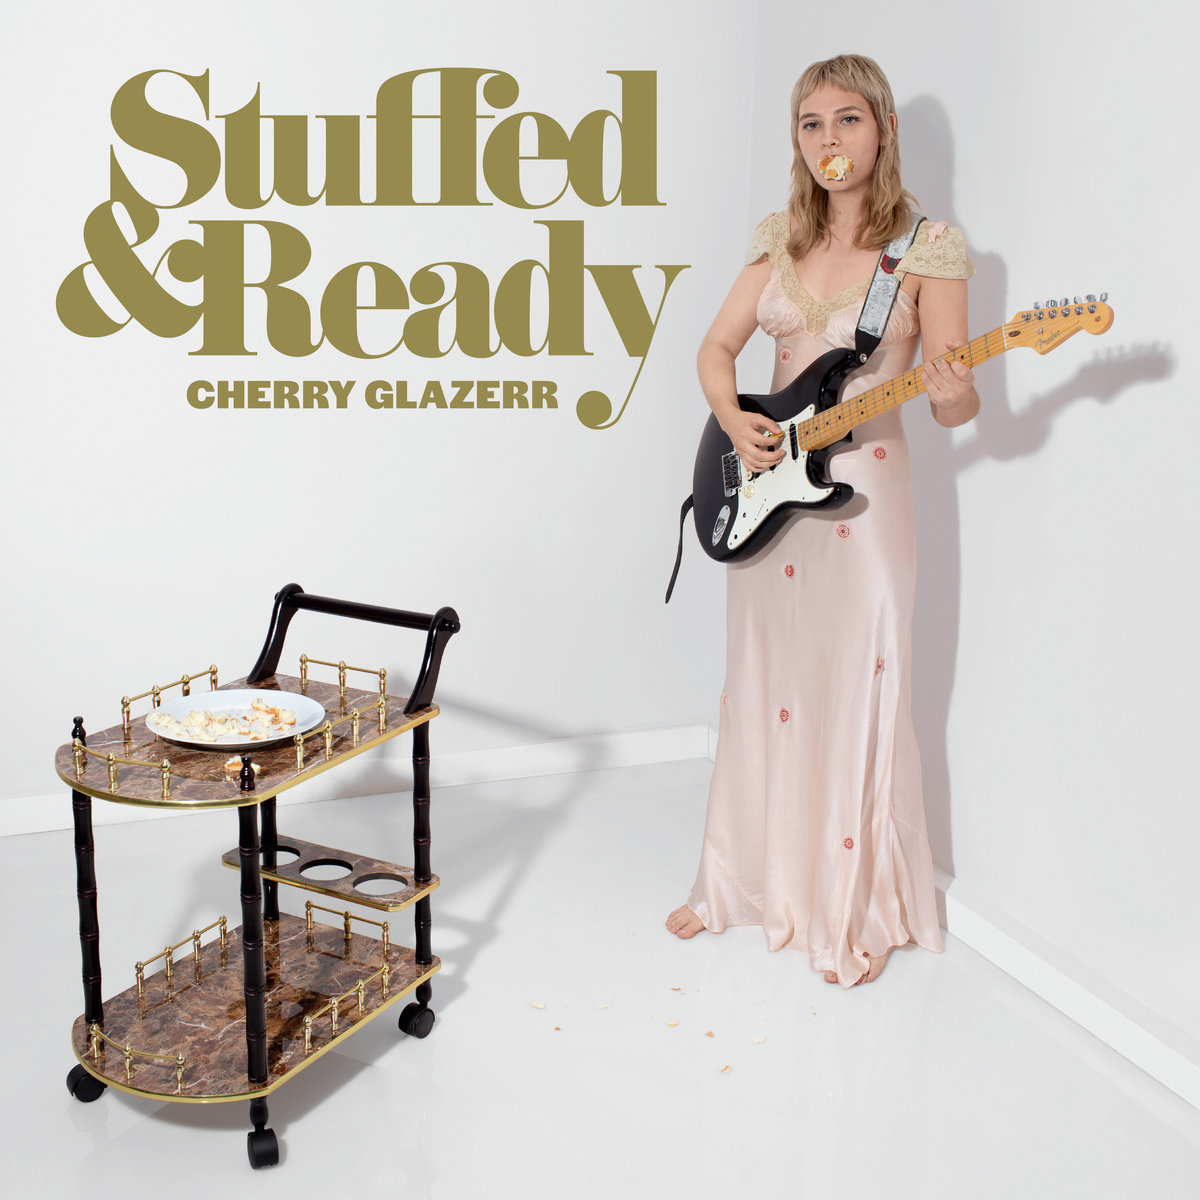 Cherry Glazerr Stuffed and Ready